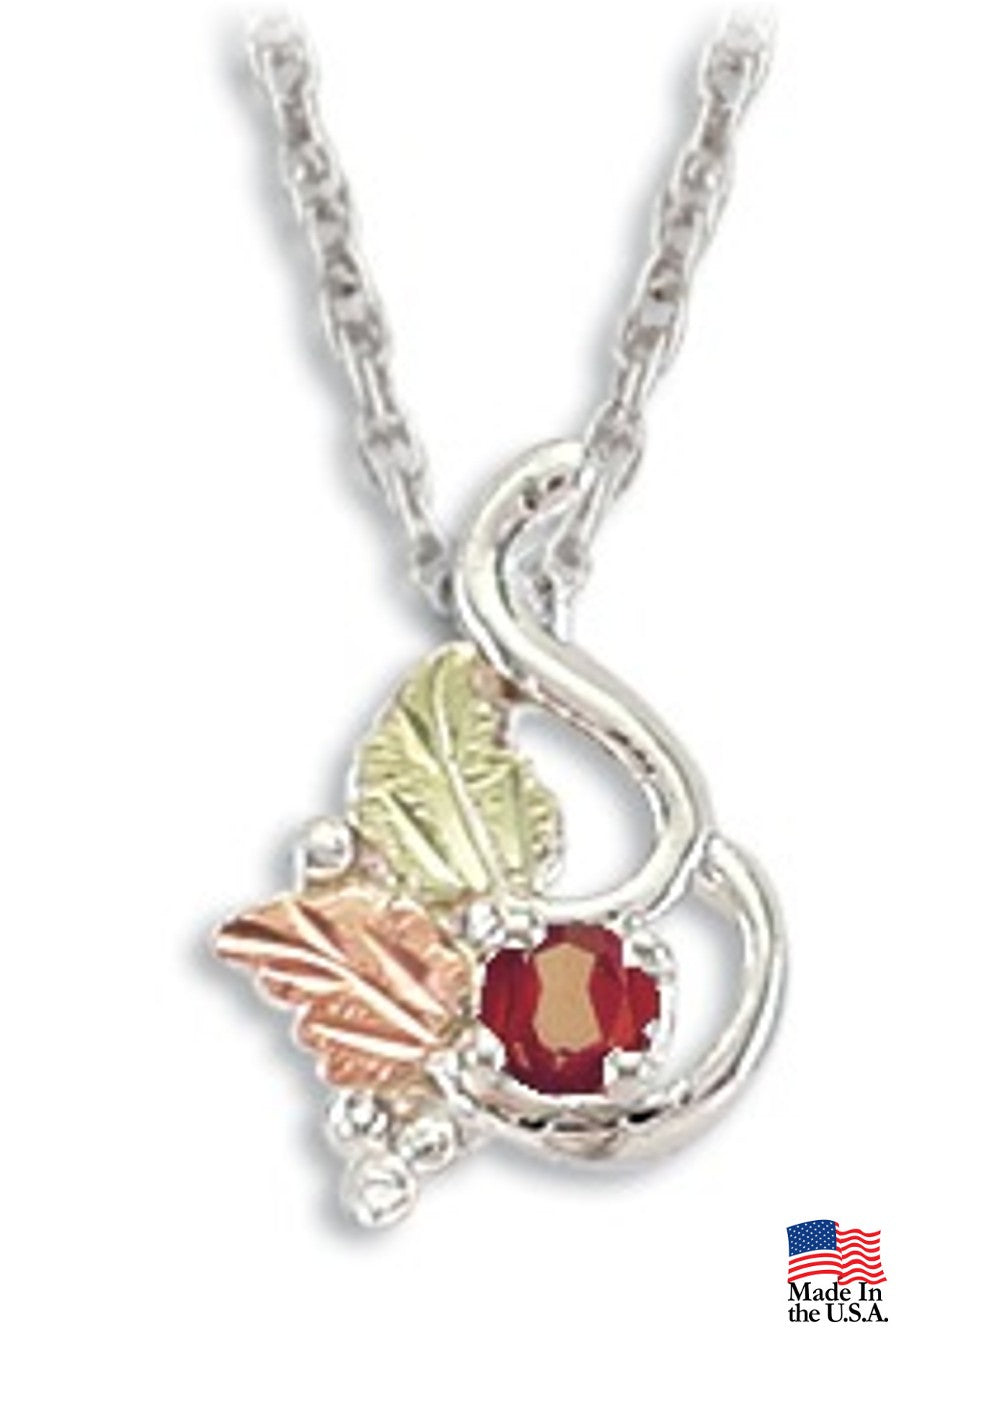 Black Hills Gold Jewelry - Women's Black Hills Gold Rose Ring - Online Store